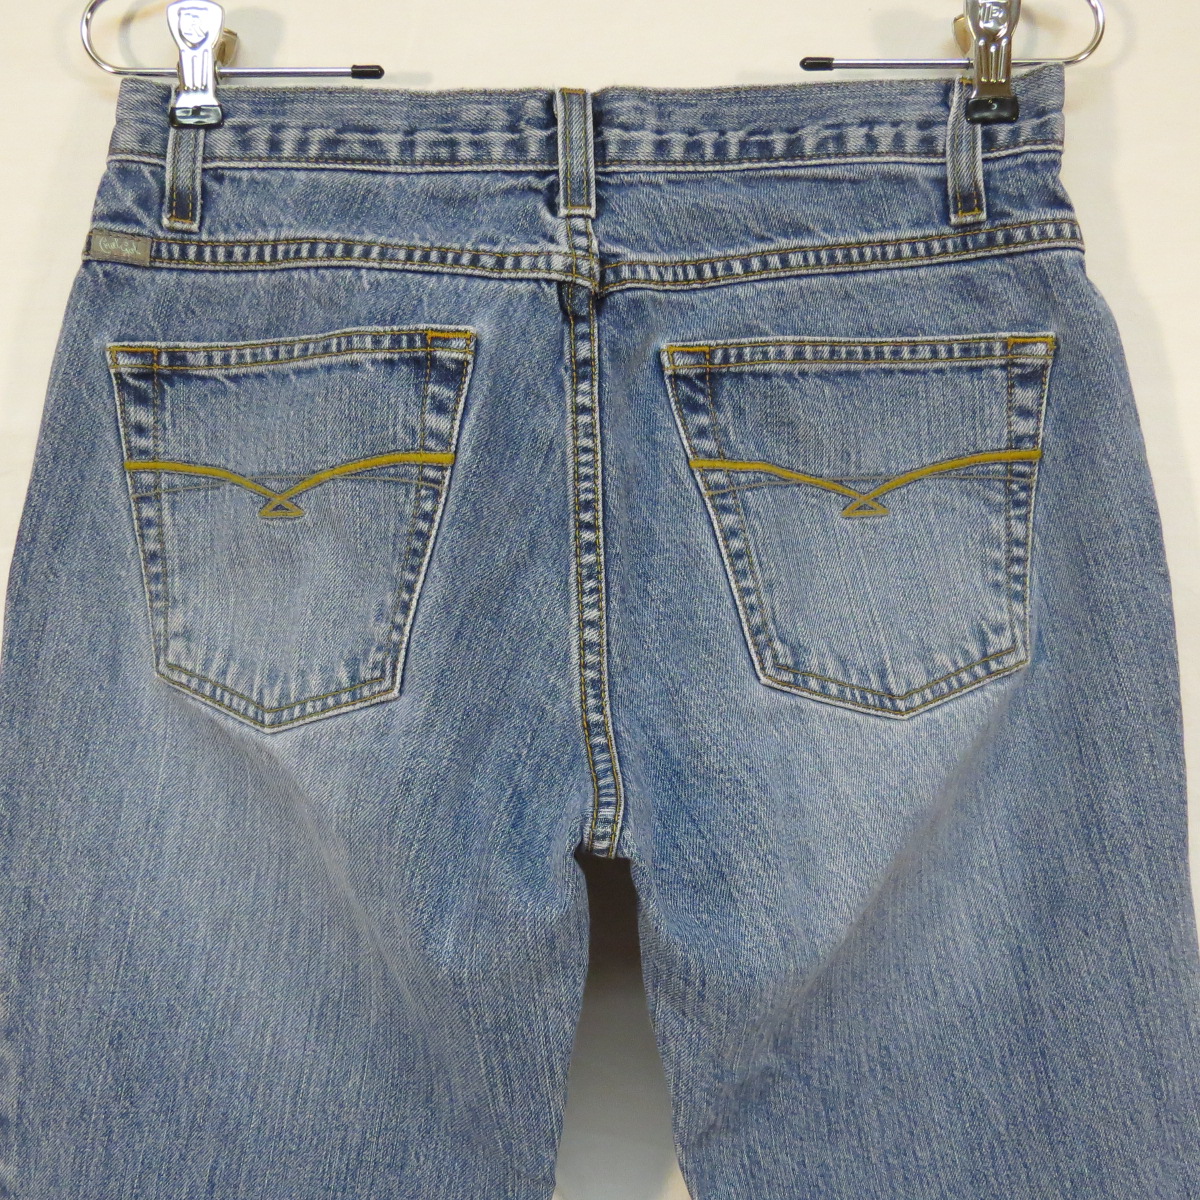 Cruel Girl Slim CB51253001 Jeans Size 9 Regular | eBay